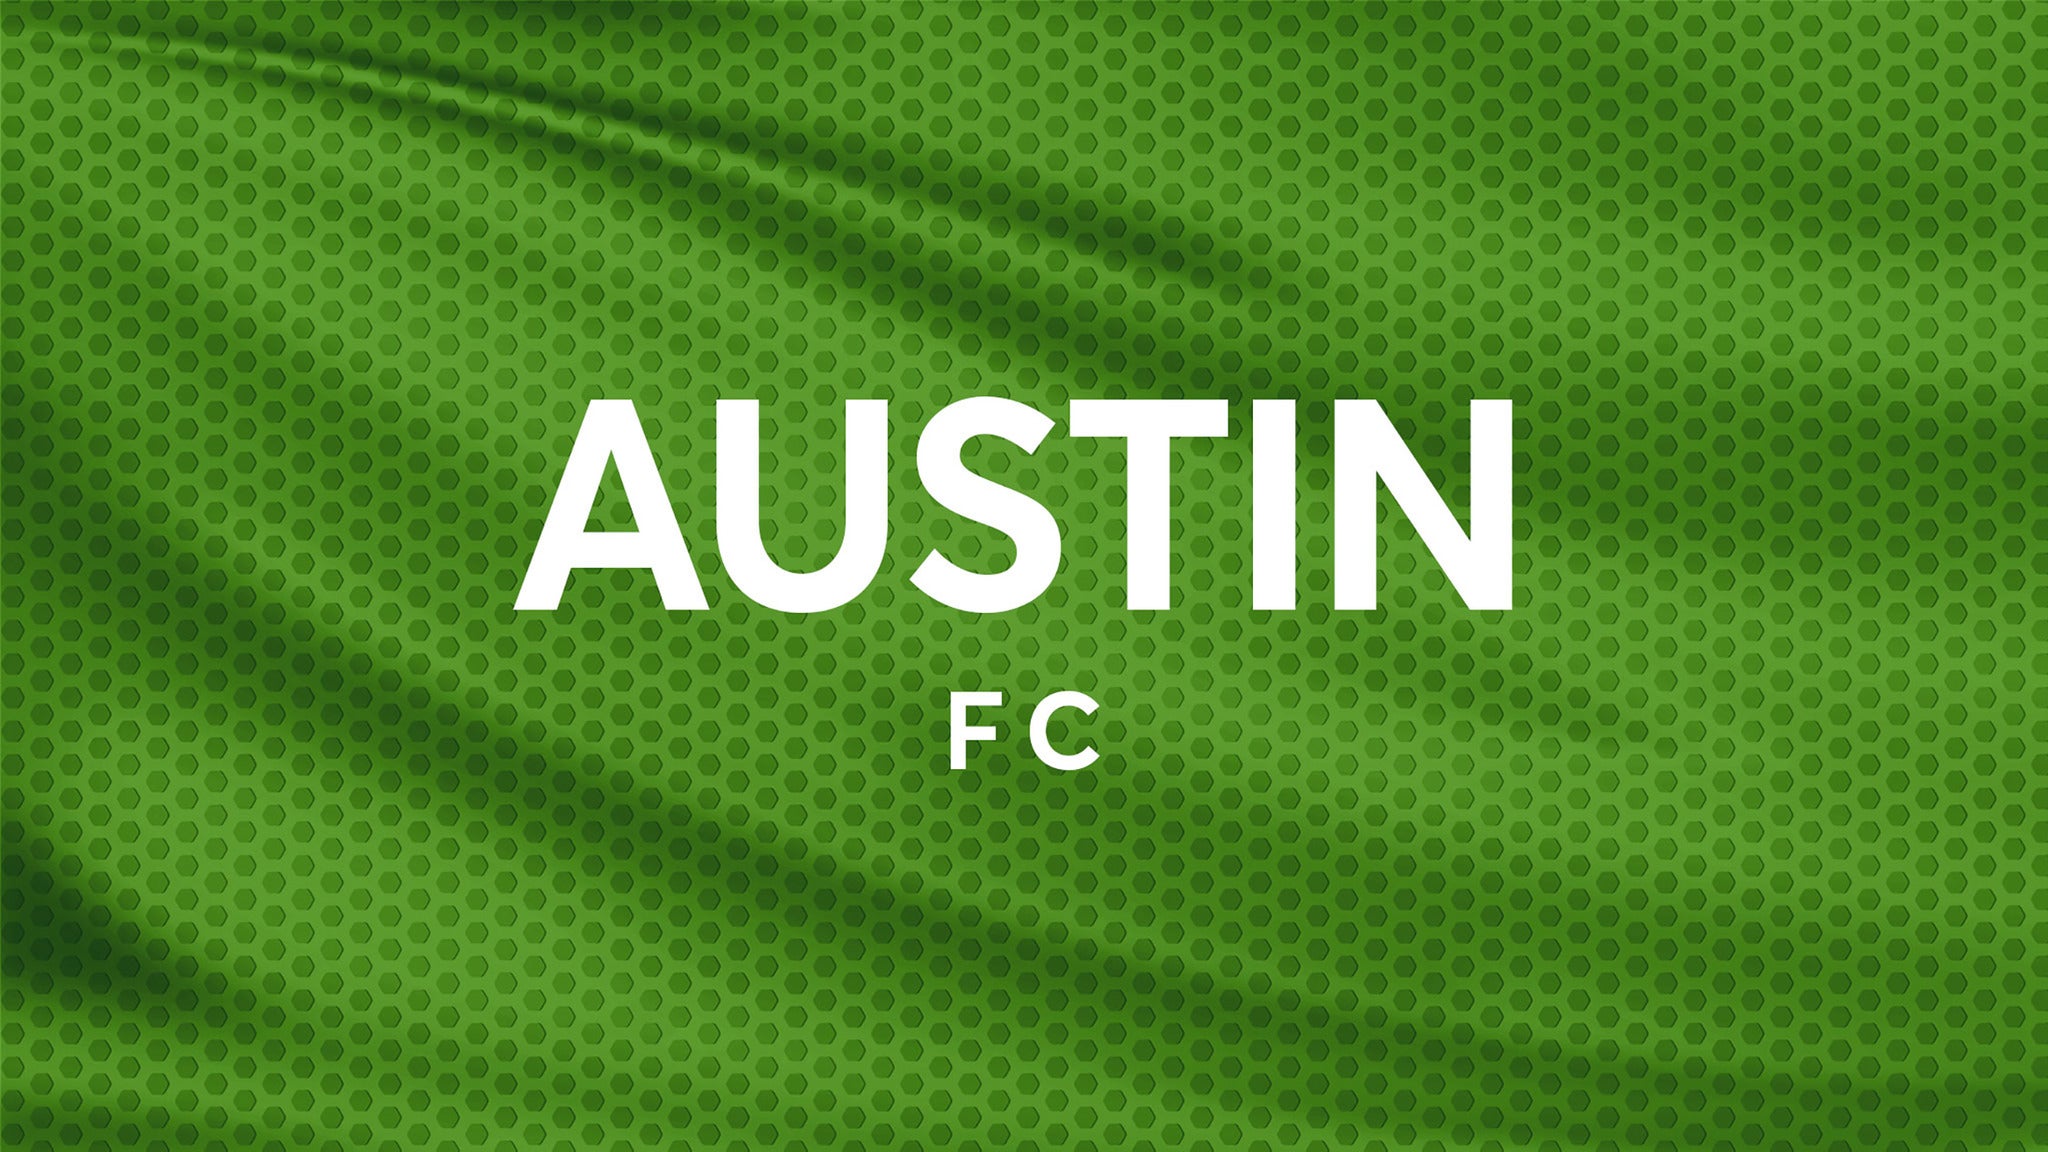 Austin FC vs. Los Angeles Galaxy at Q2 Stadium